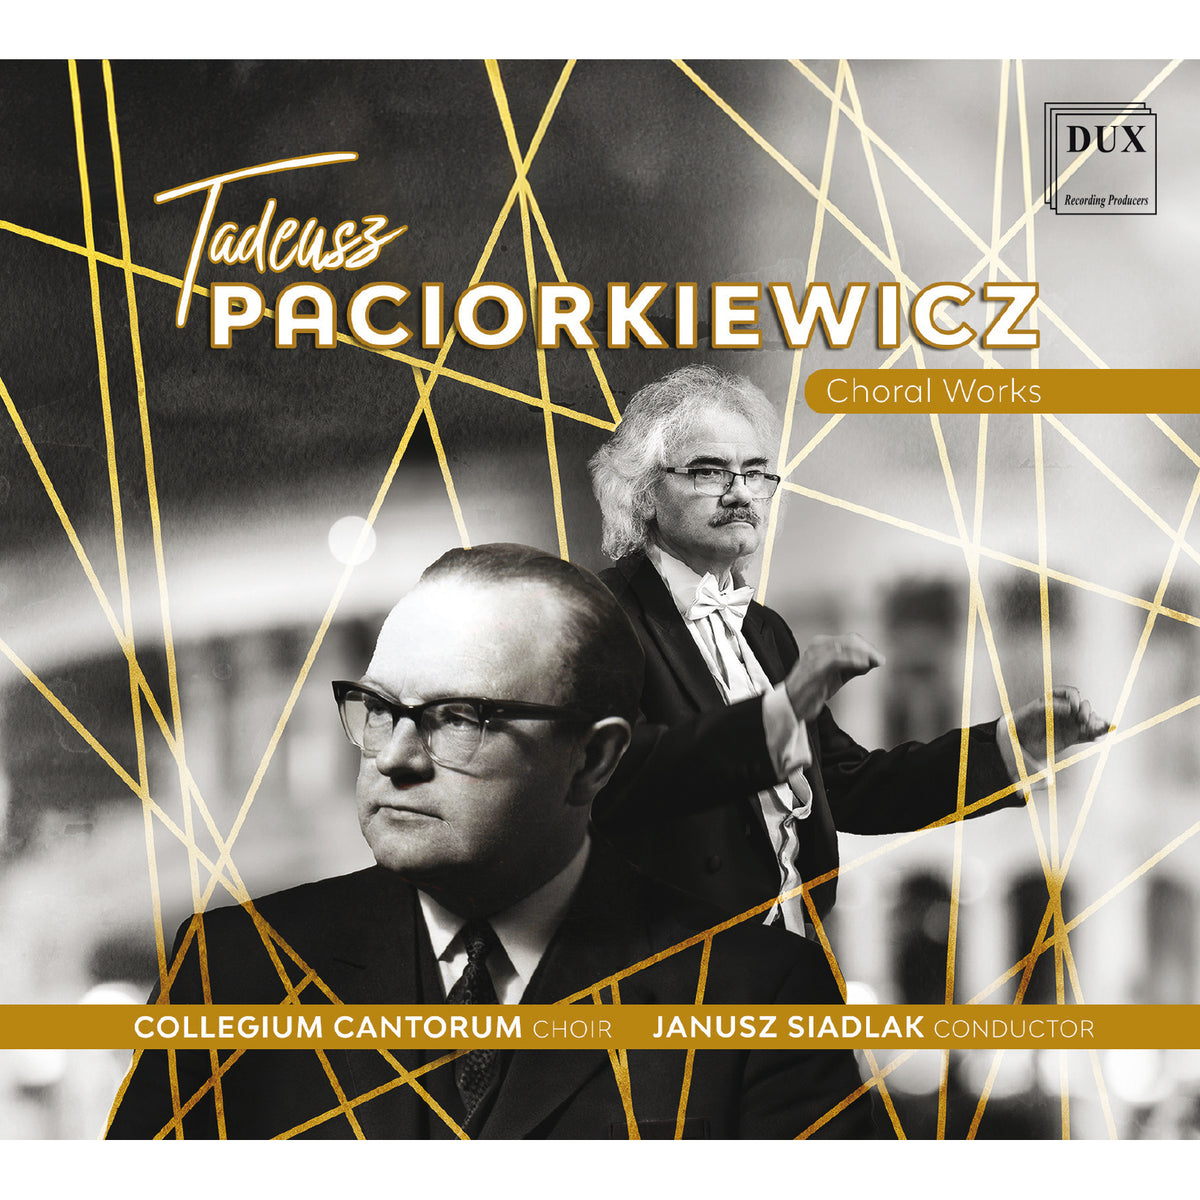 Collegium Cantorum Choir, Janusz Siadlak - Paciorkiewicz: Choral Works - DUX2055